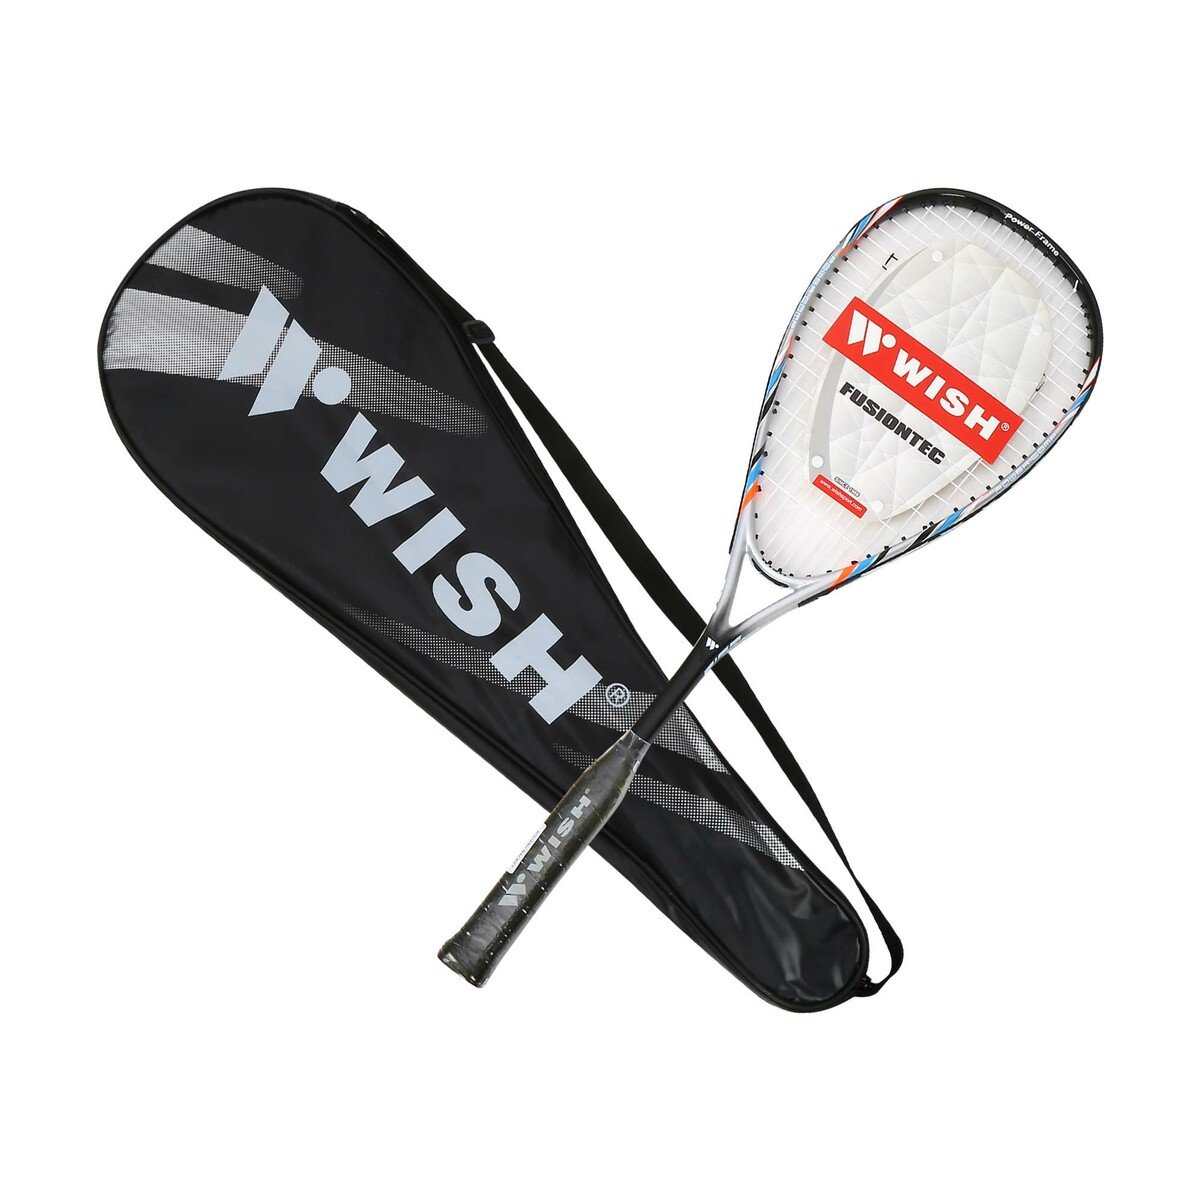 Wish Squash Racket 9912